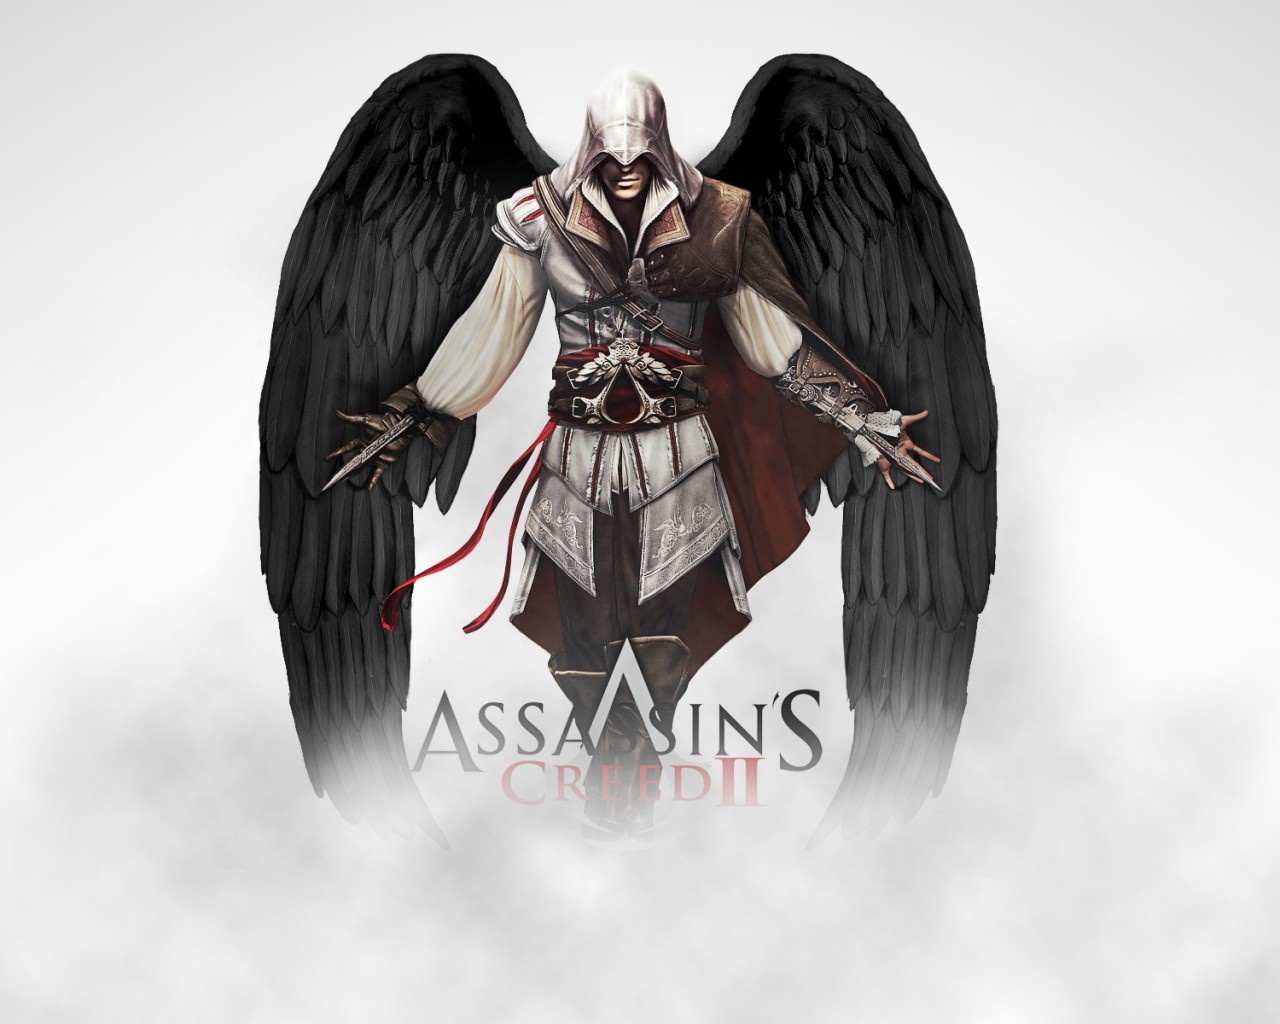 General 1280x1024 Assassin's Creed Ezio Auditore da Firenze video games artwork Assassin's Creed 2 frontal view